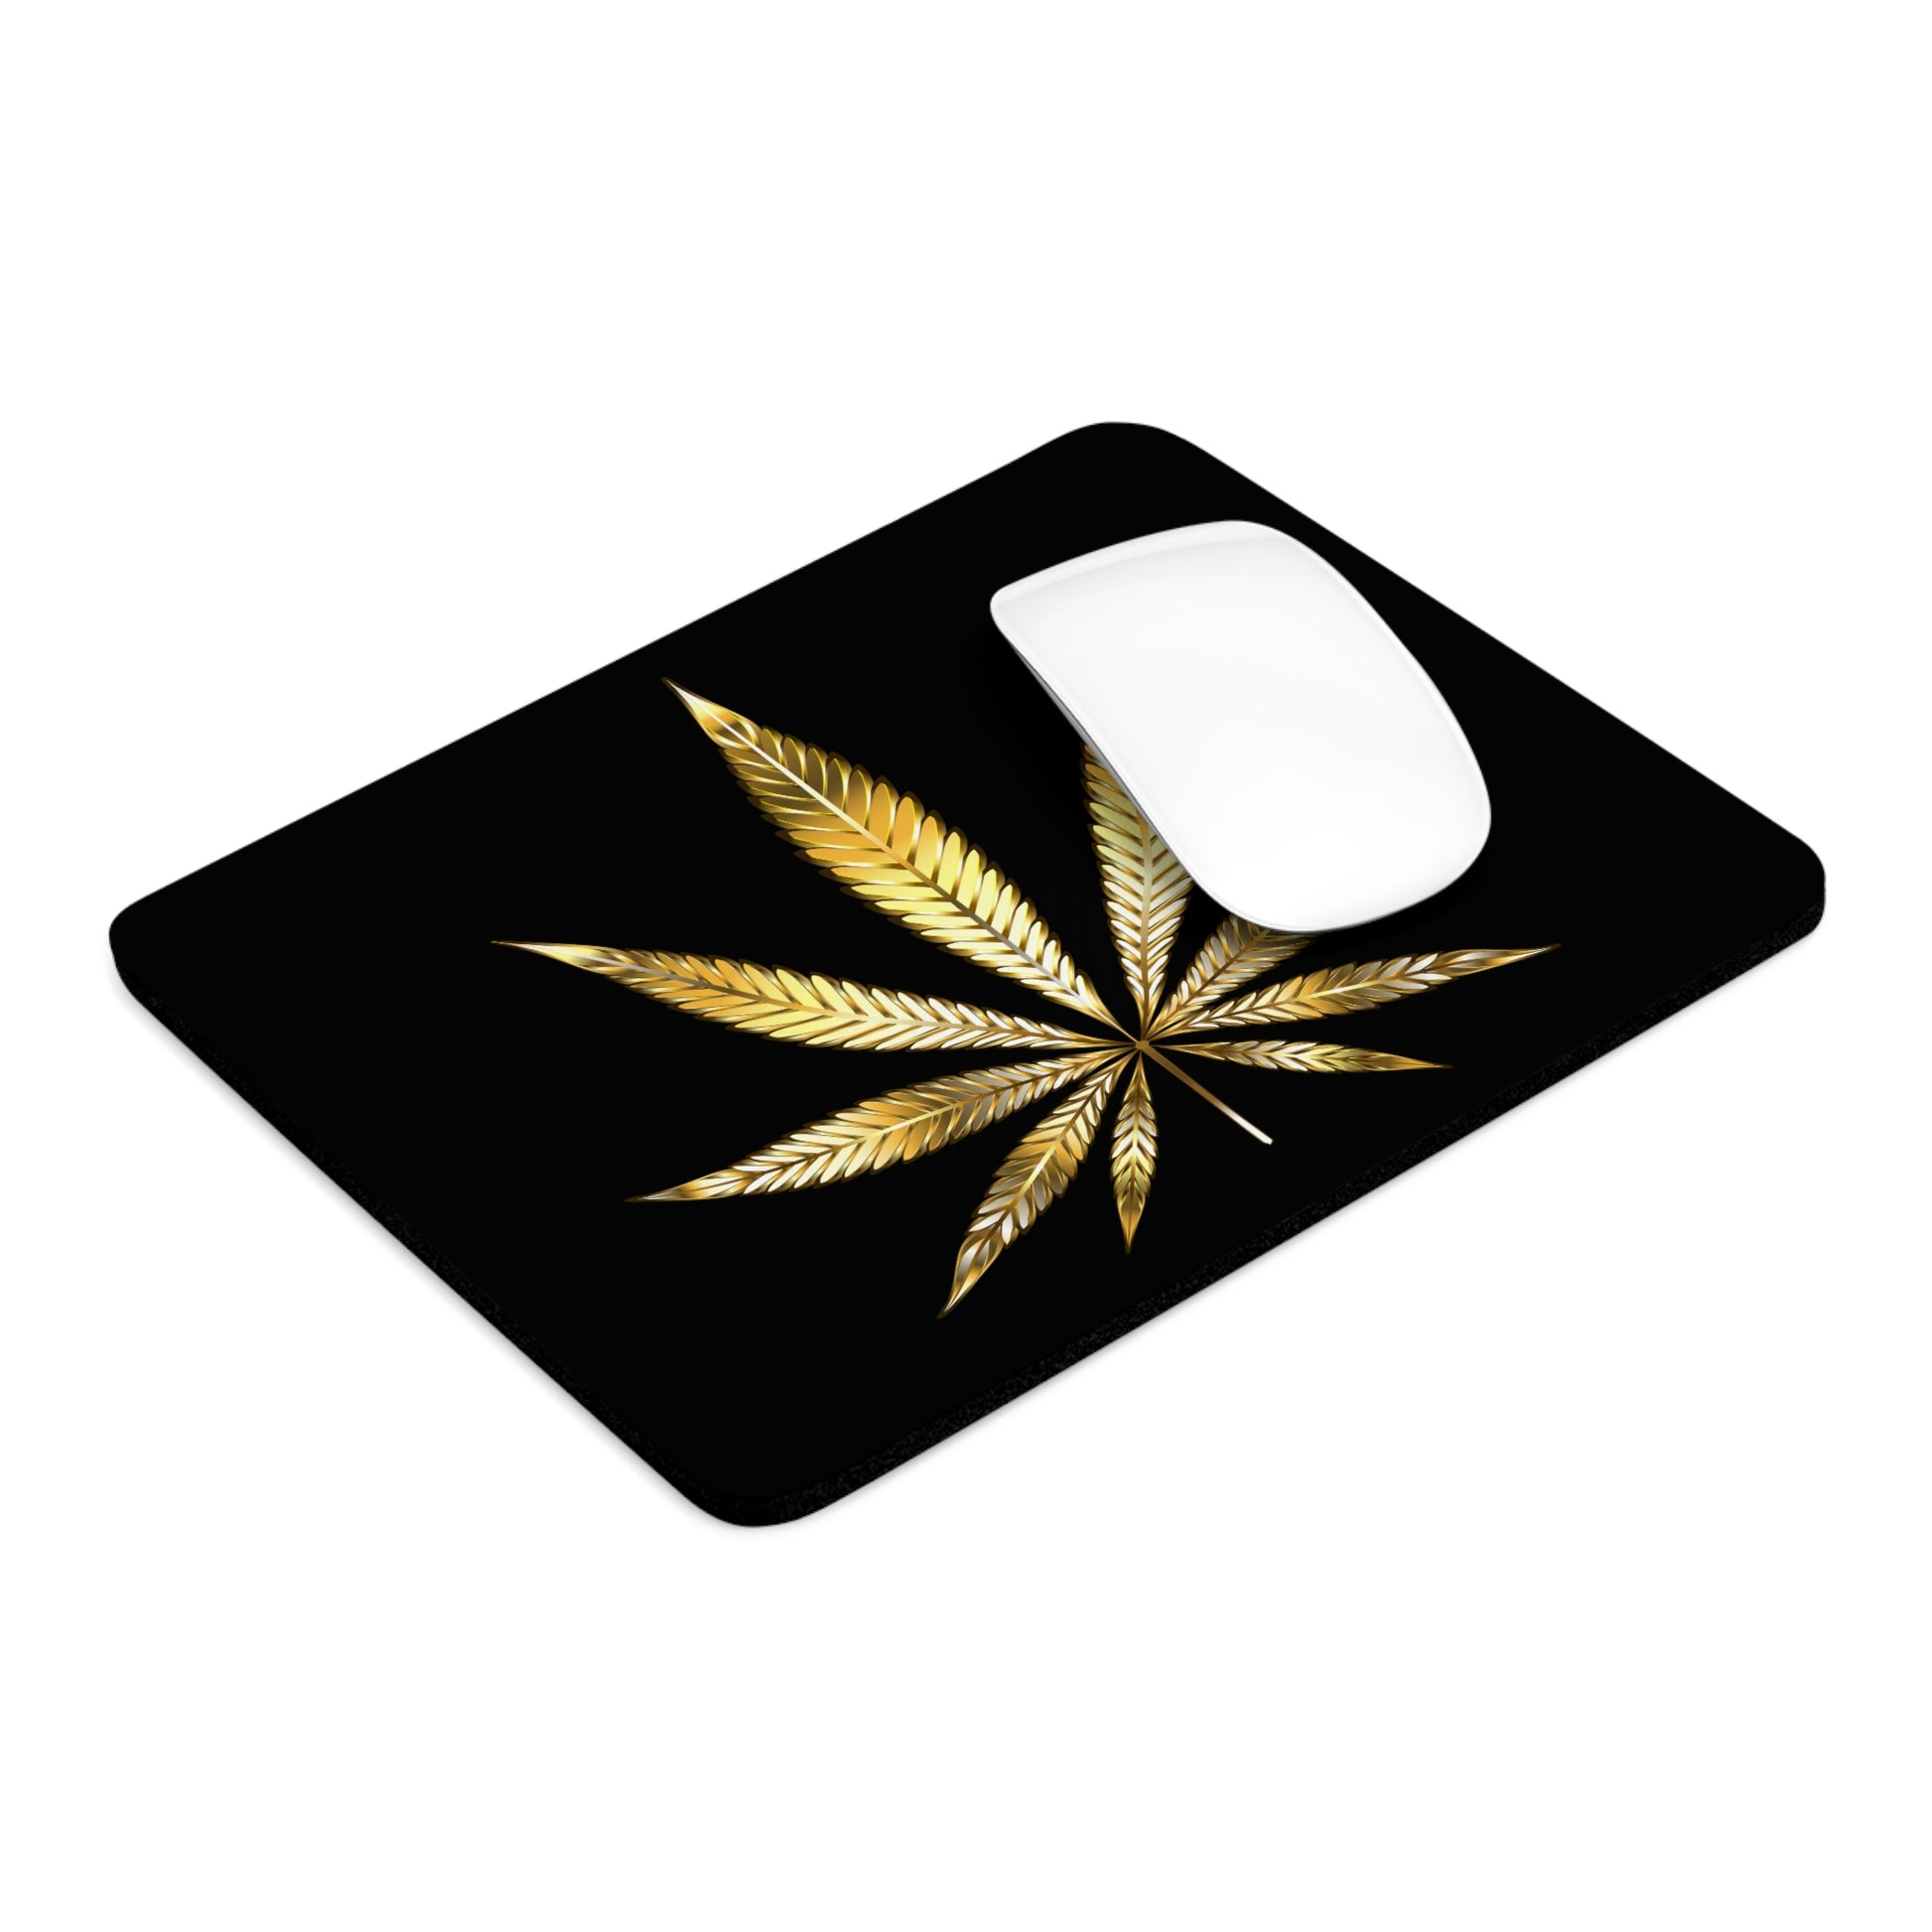 Gold Marijuana Leaf Mouse Pad.